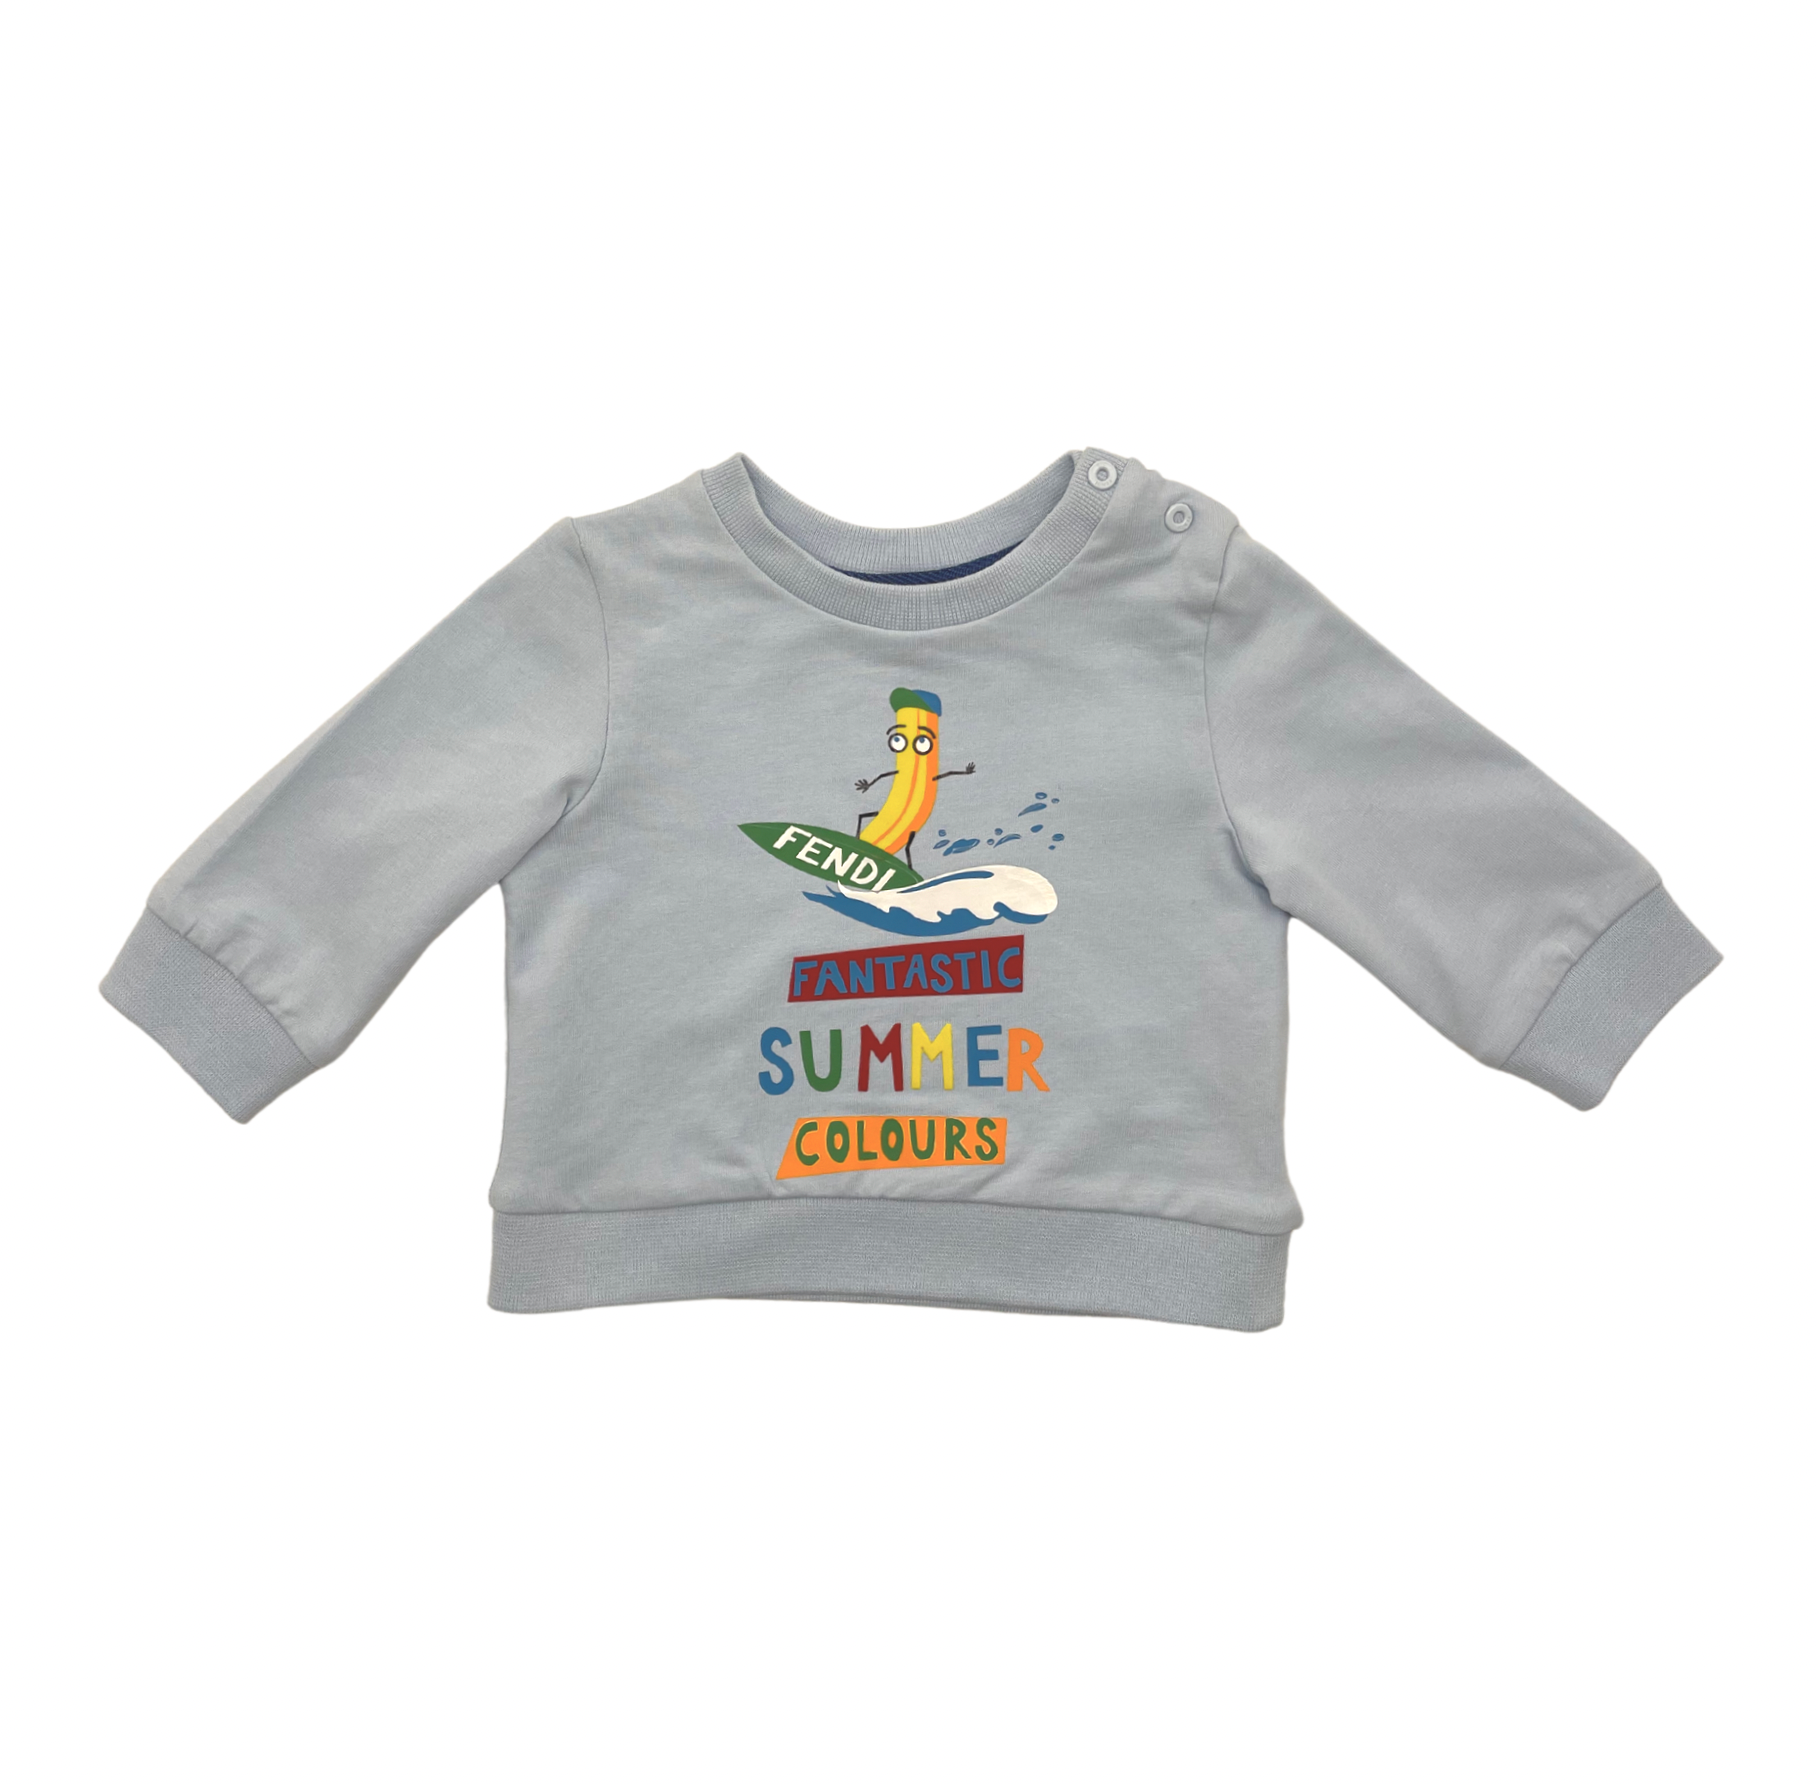 FENDI - "Fantastic summer colours" sweatshirt - 3 months